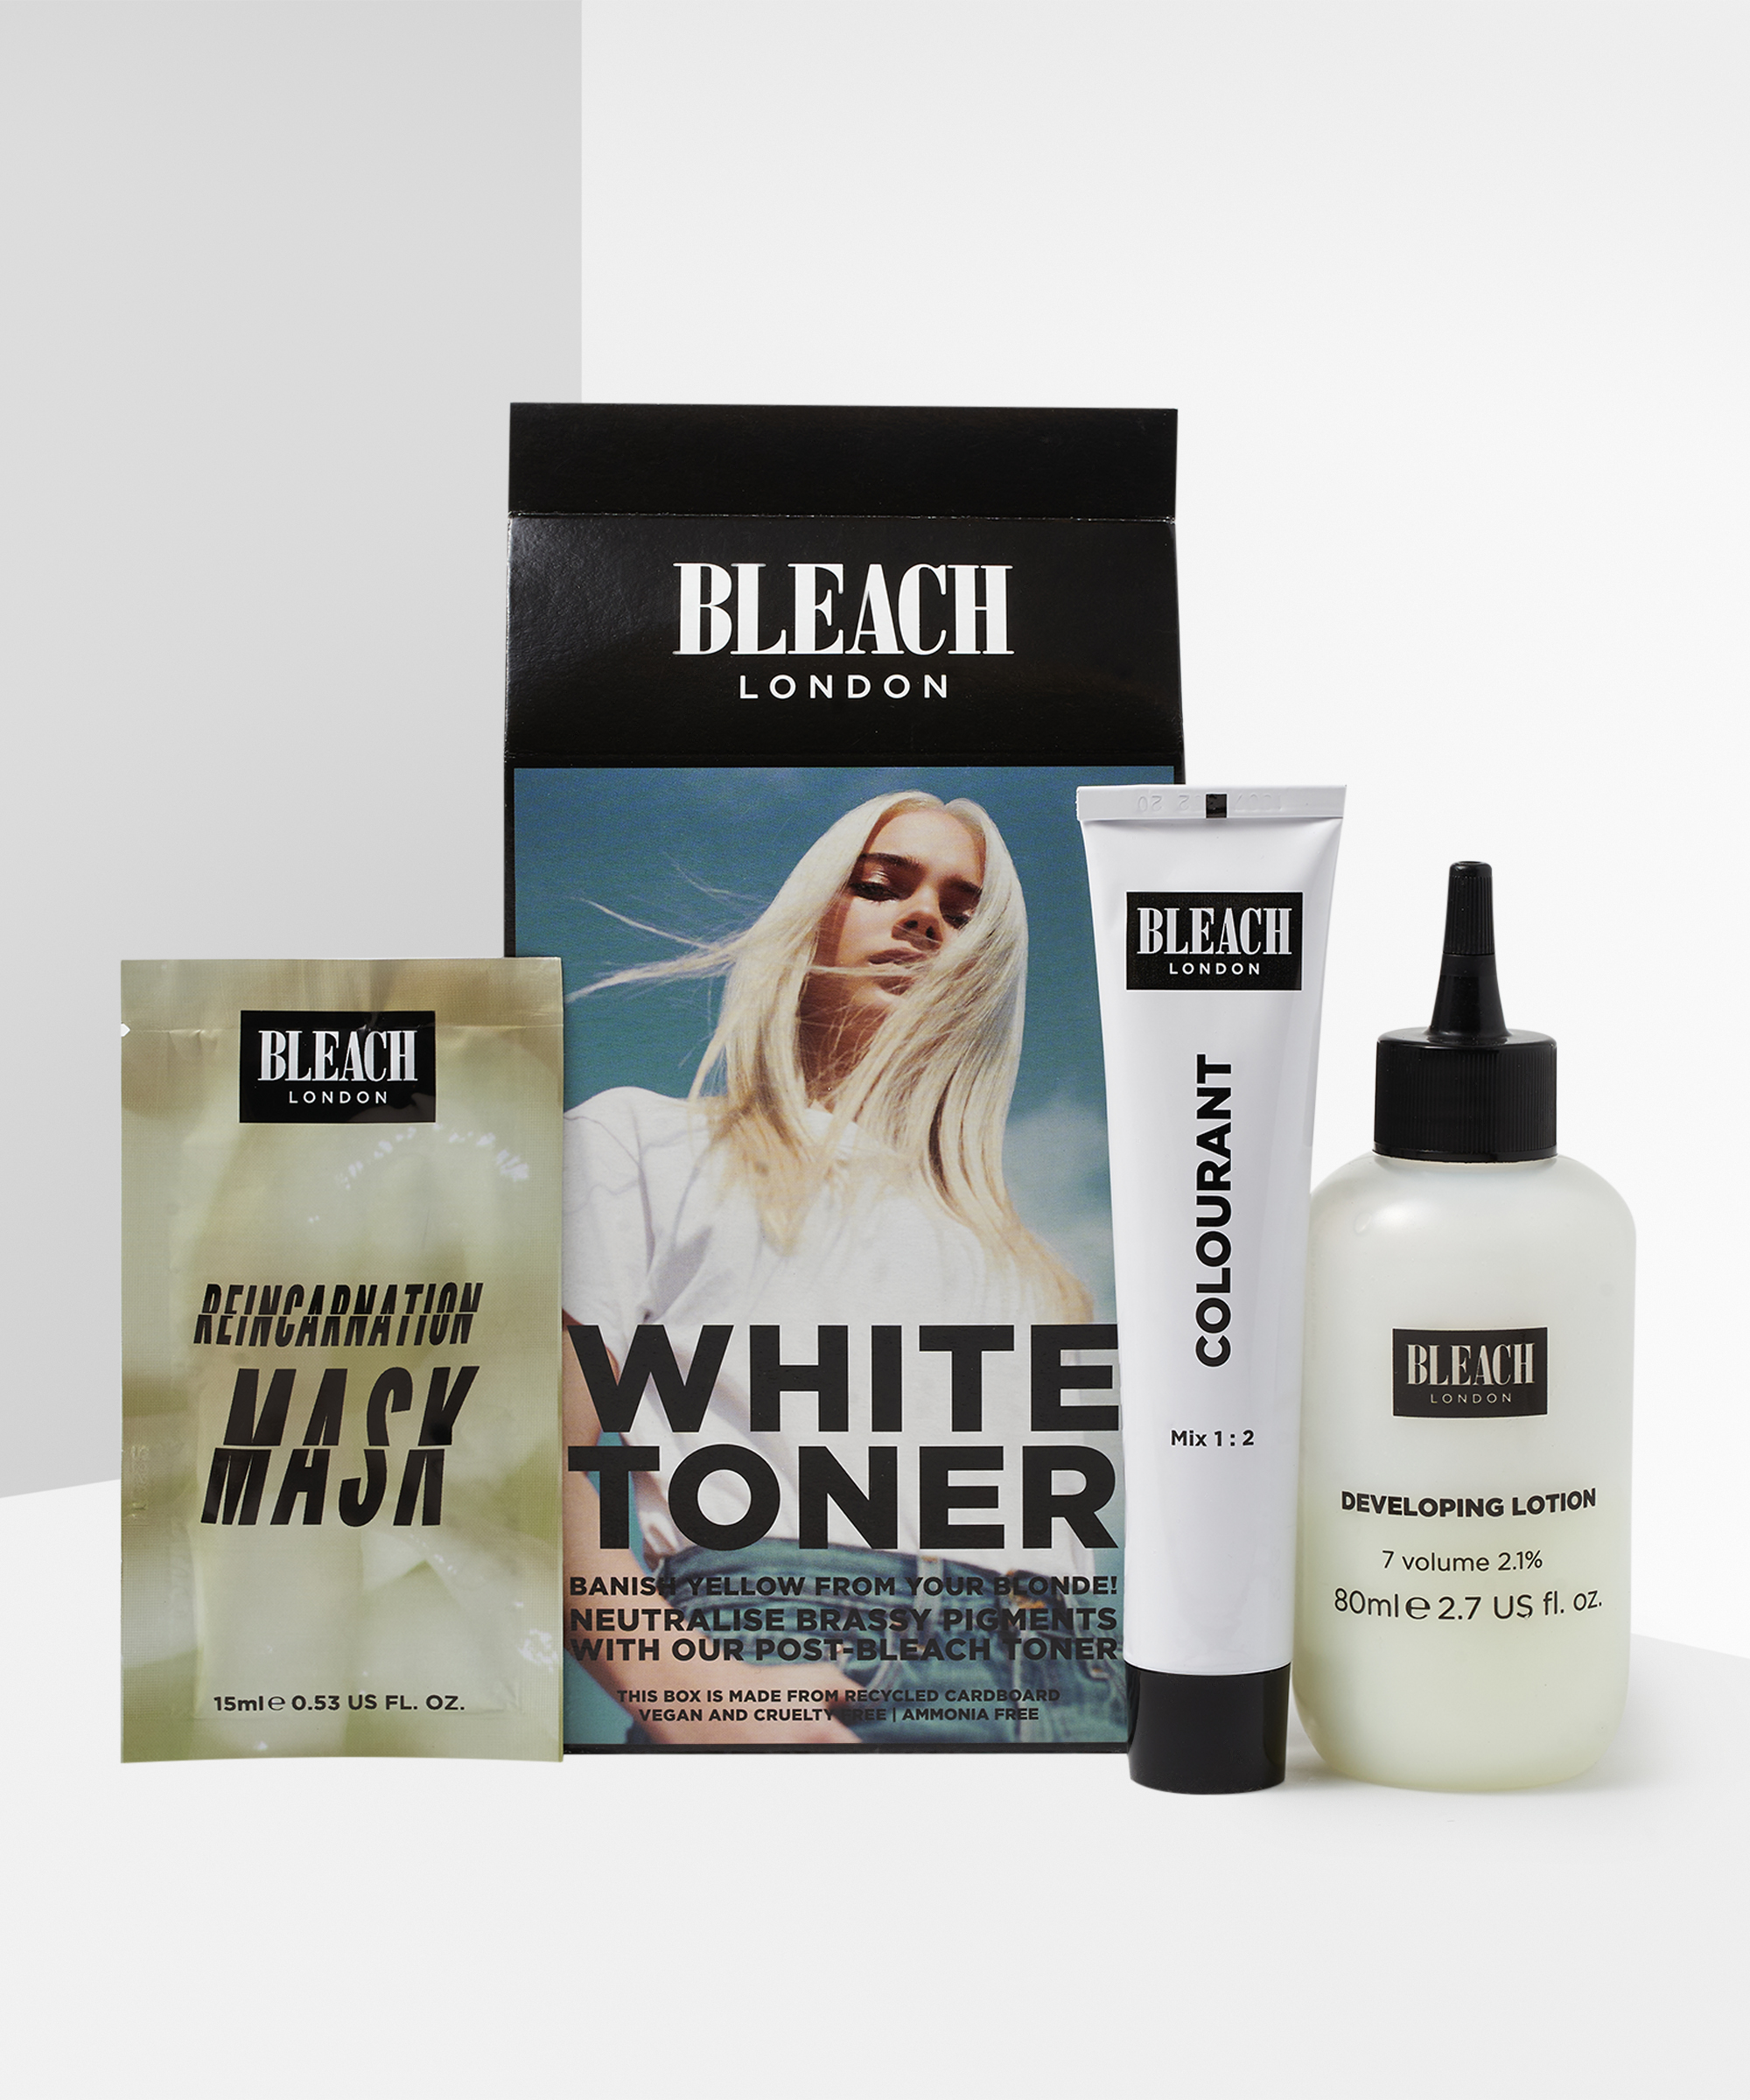 Bleach London White Toner Kit at BEAUTY BAY